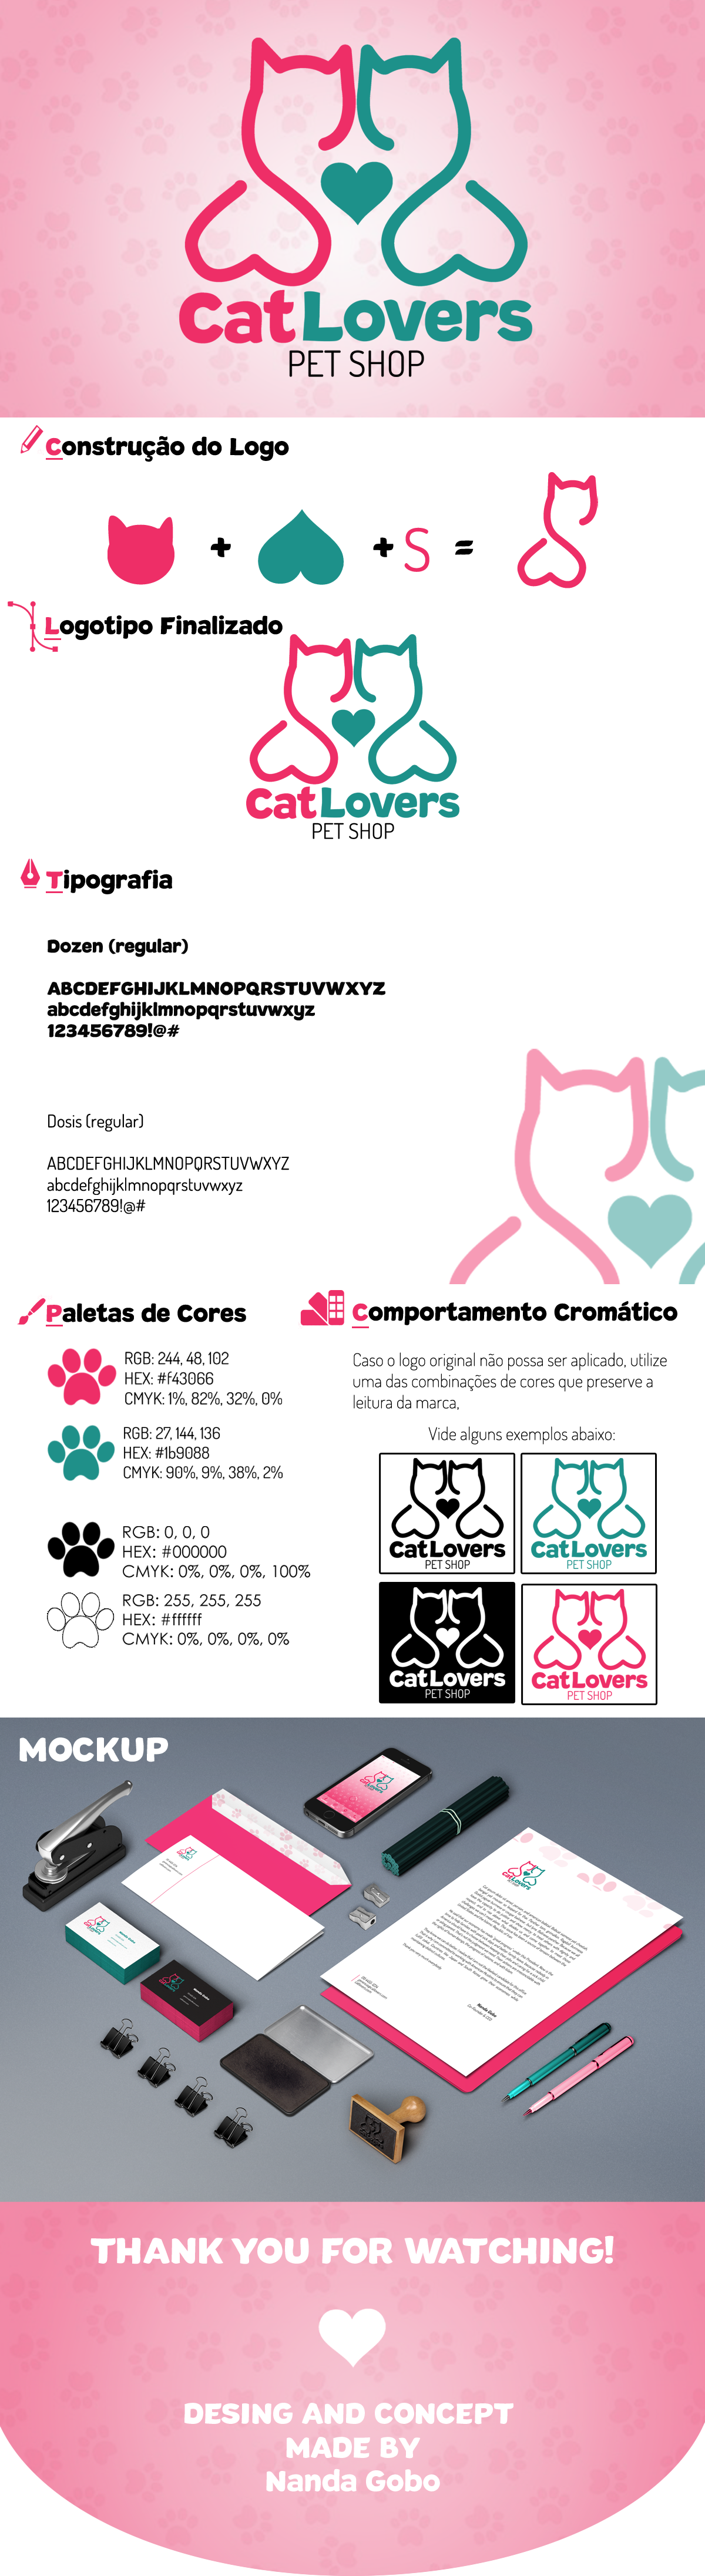 visual identidy marca pet shop petshop Cat